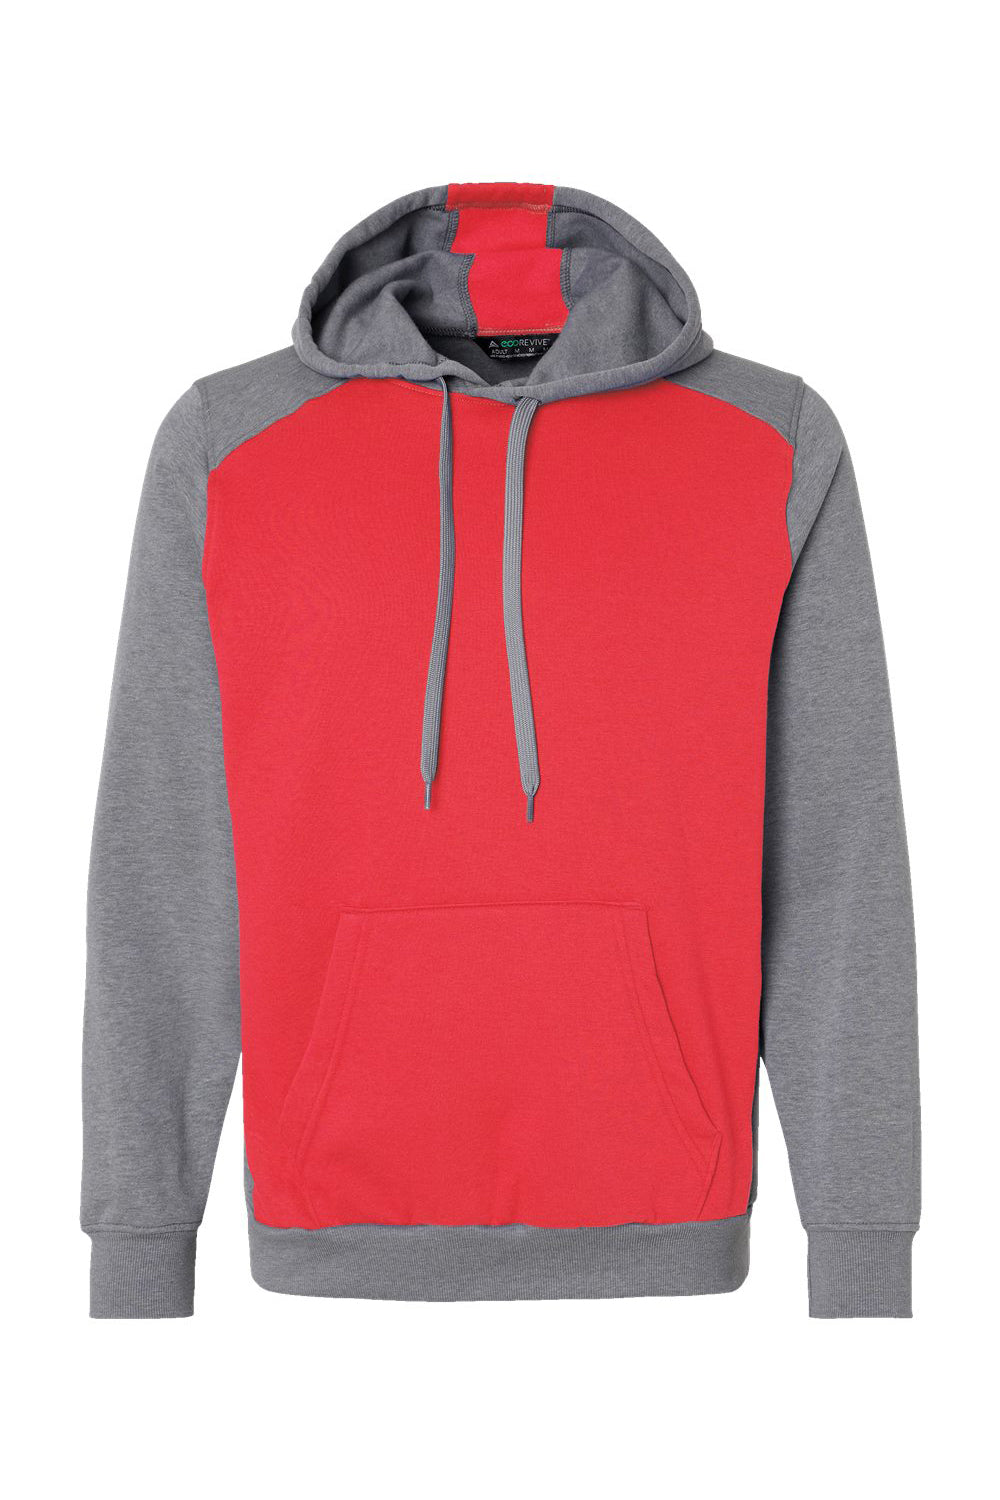 Augusta Sportswear 6865 Mens Eco Revive 3 Season Fleece Hooded Sweatshirt Hoodie Scarlet Red/Heather Grey Flat Front